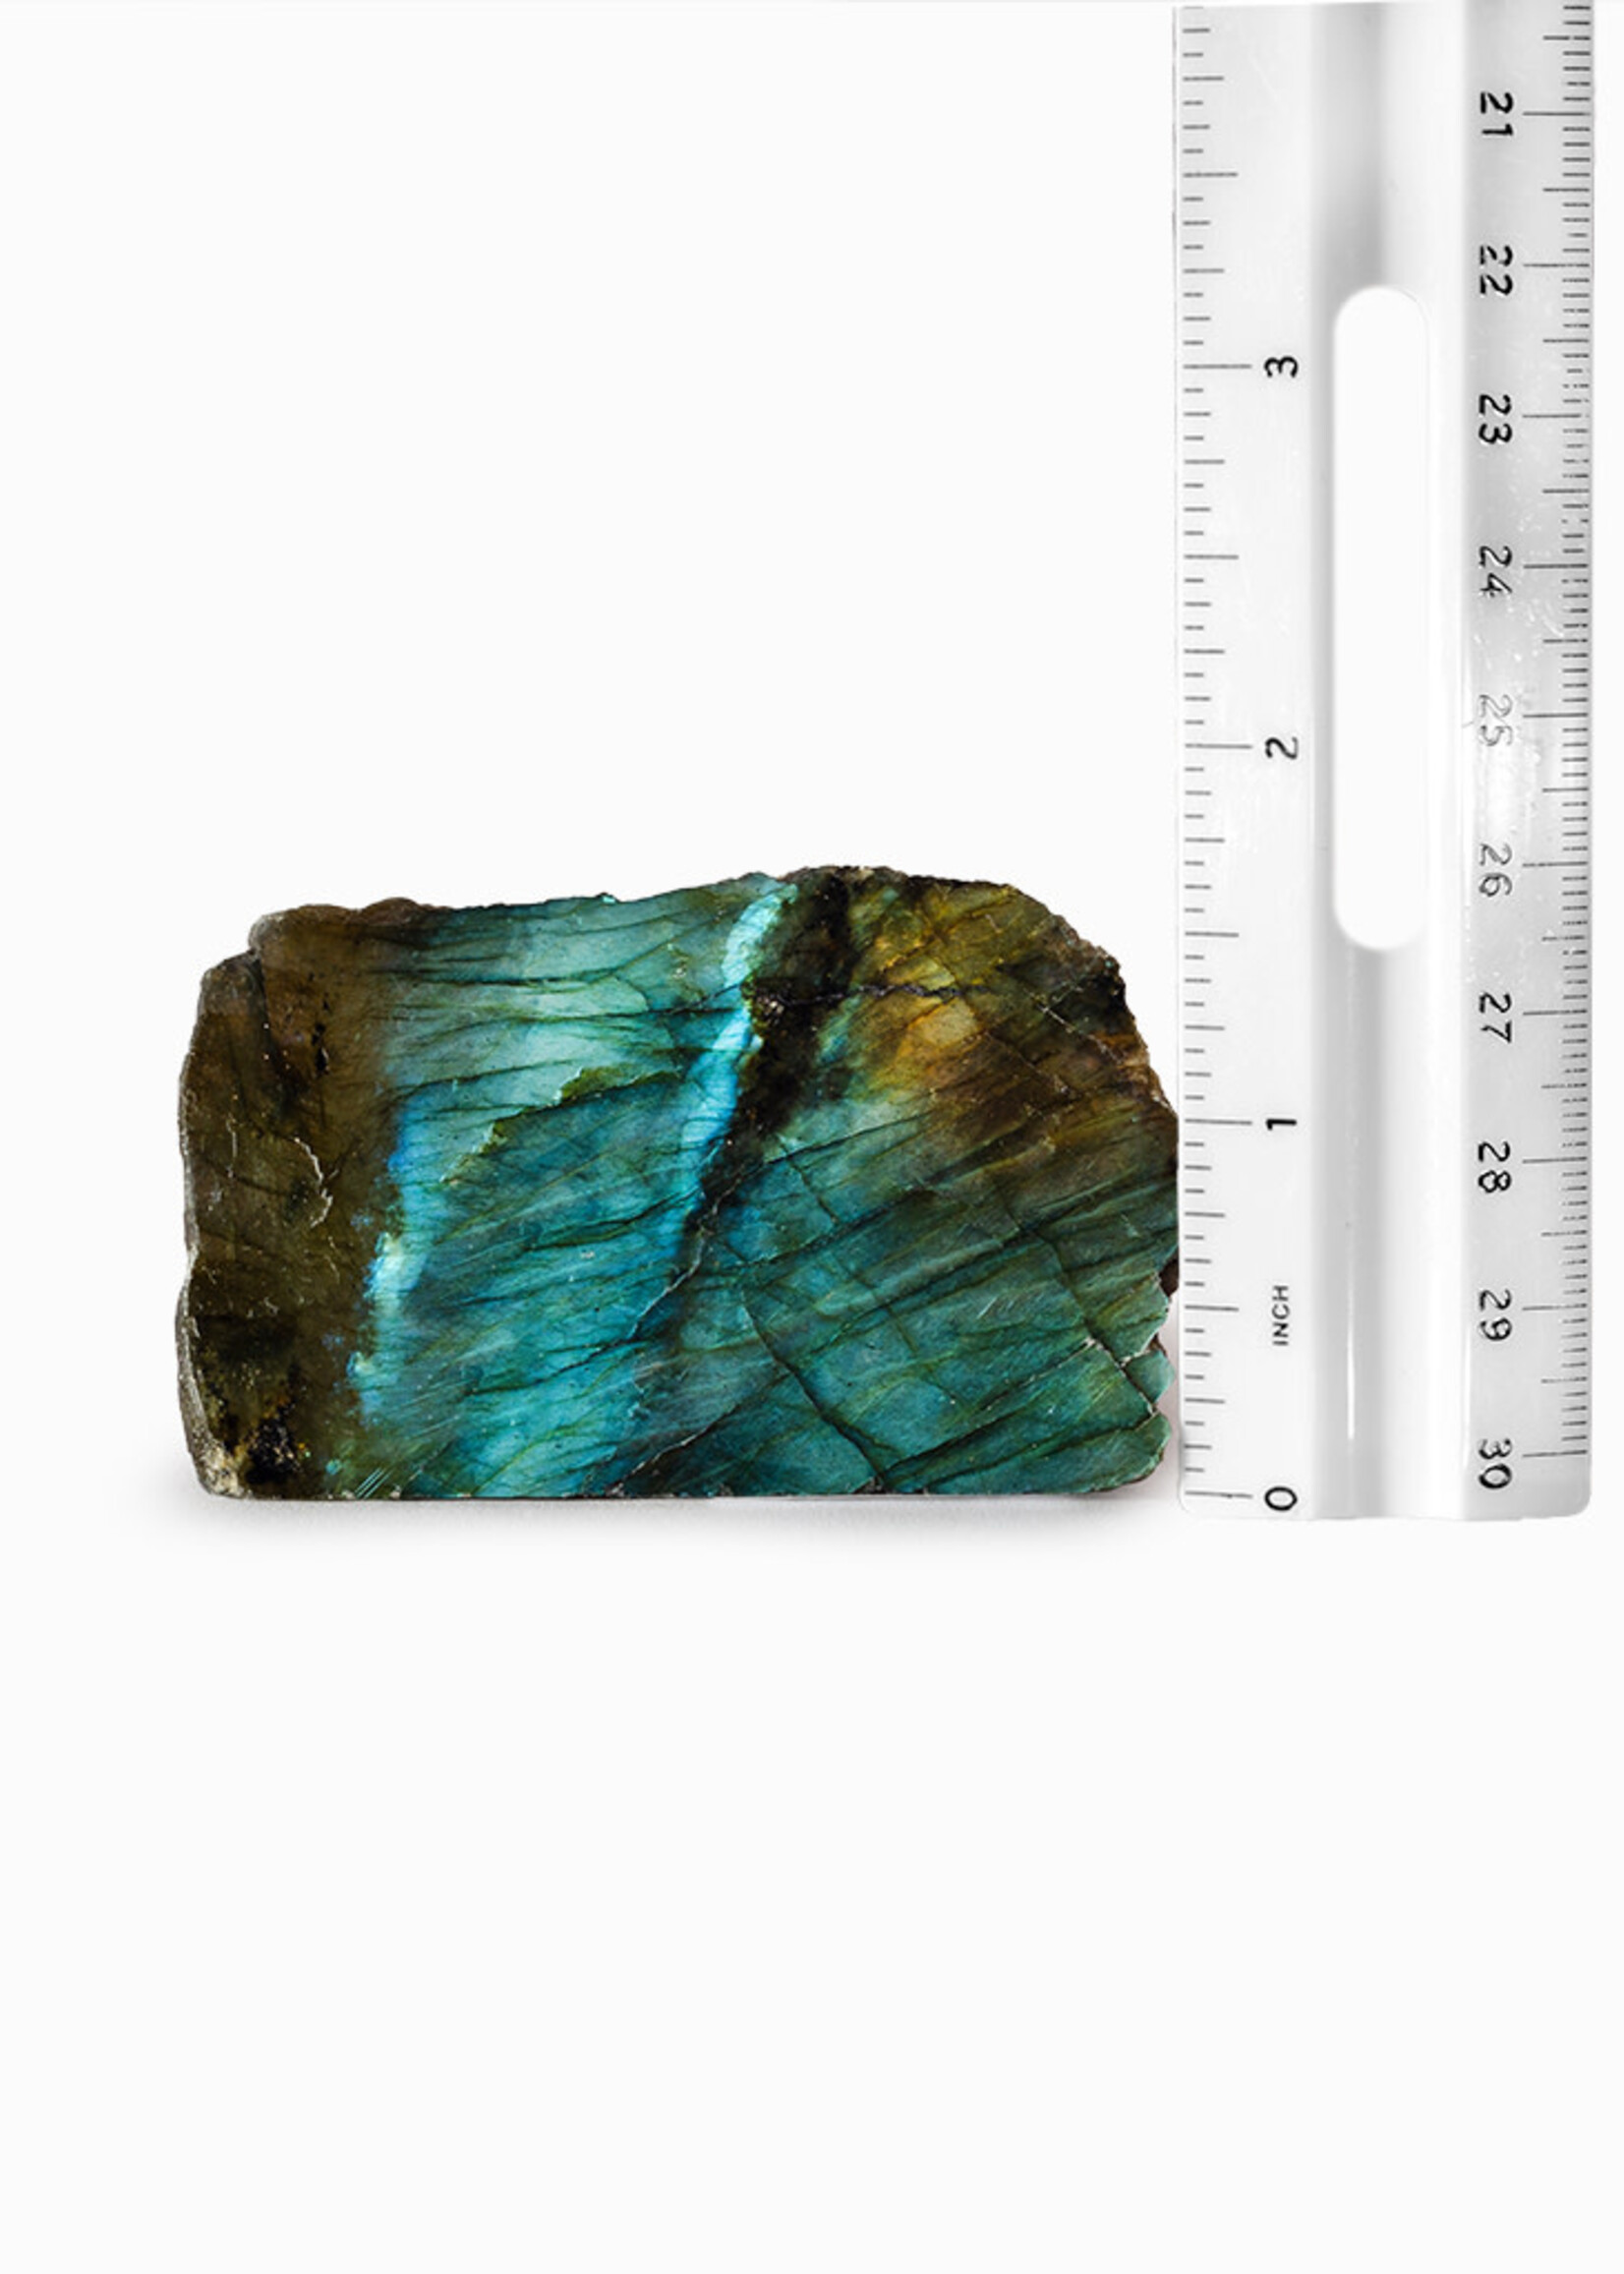 Minerals & Mystics Labradorite Slab